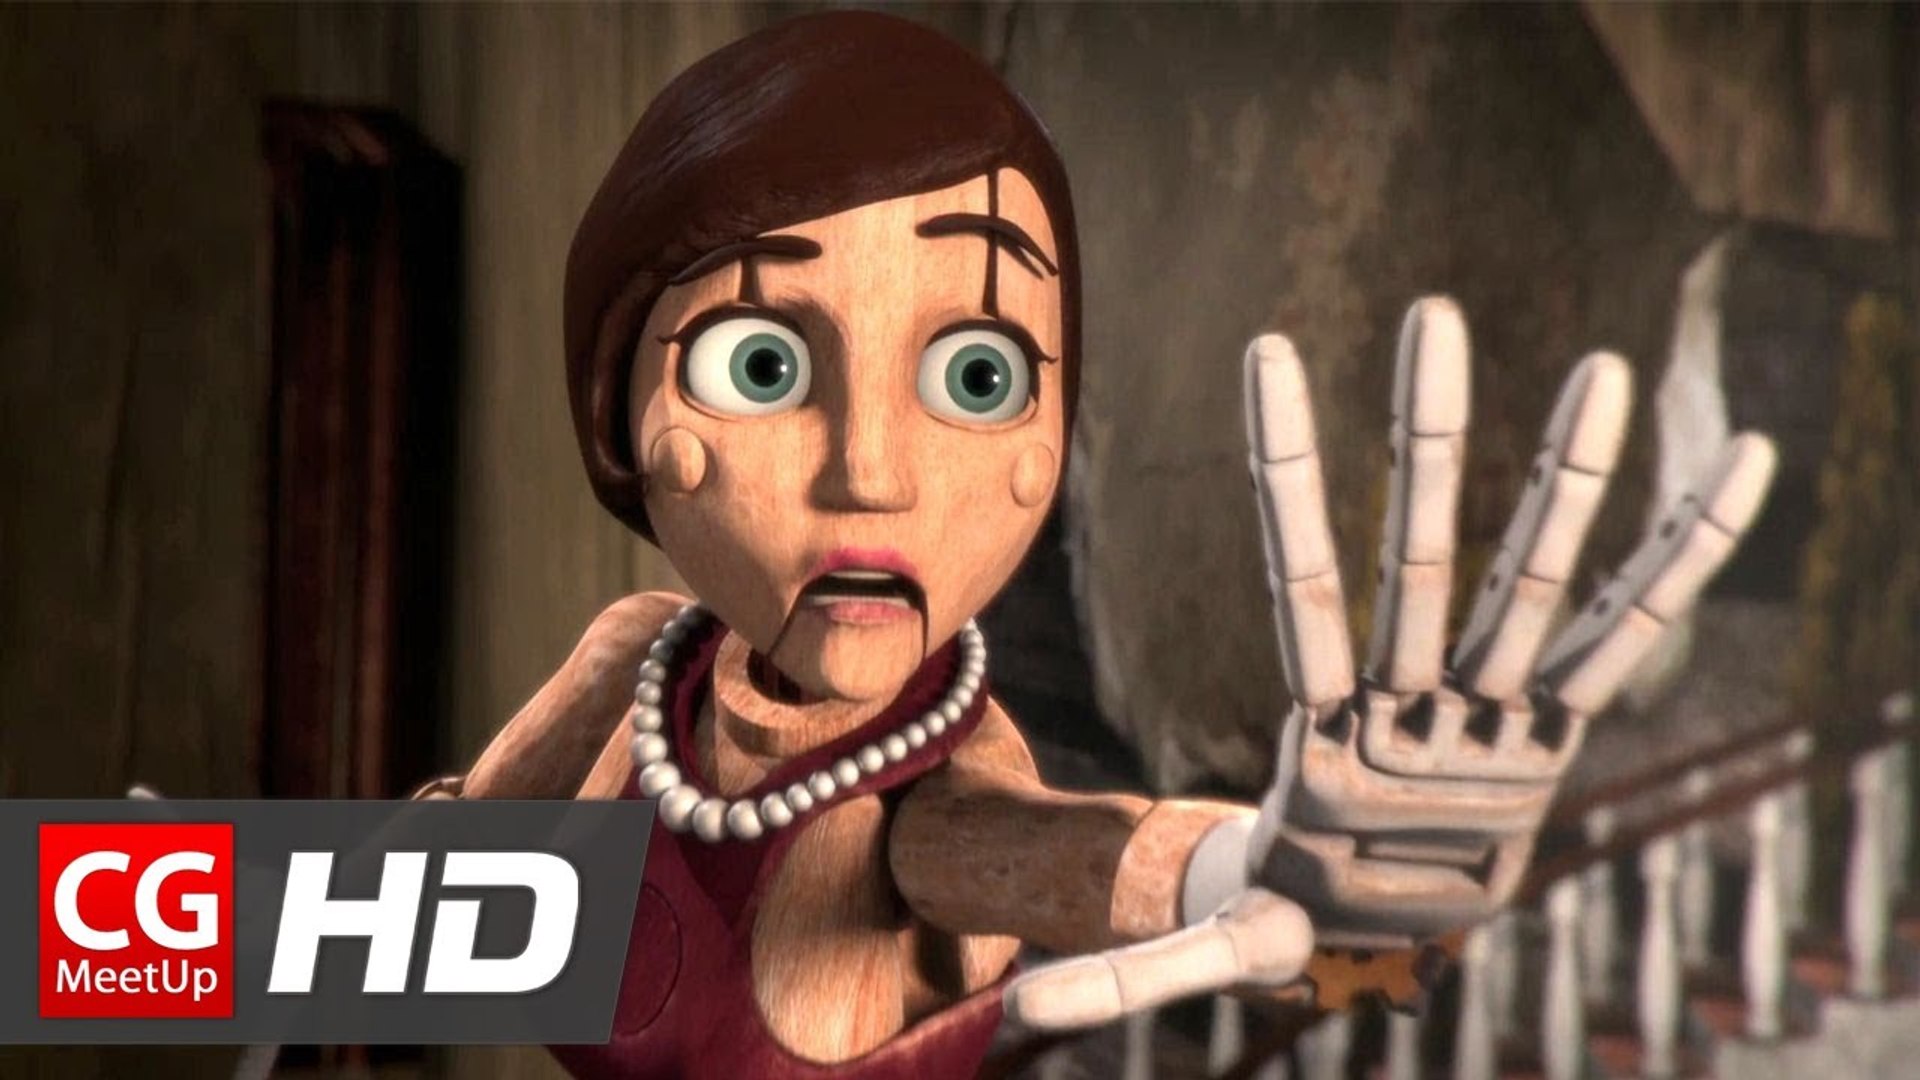 CGI Animated Short Film HD "Little Darling" by Big Cookie Studios |  CGMeetup - video Dailymotion